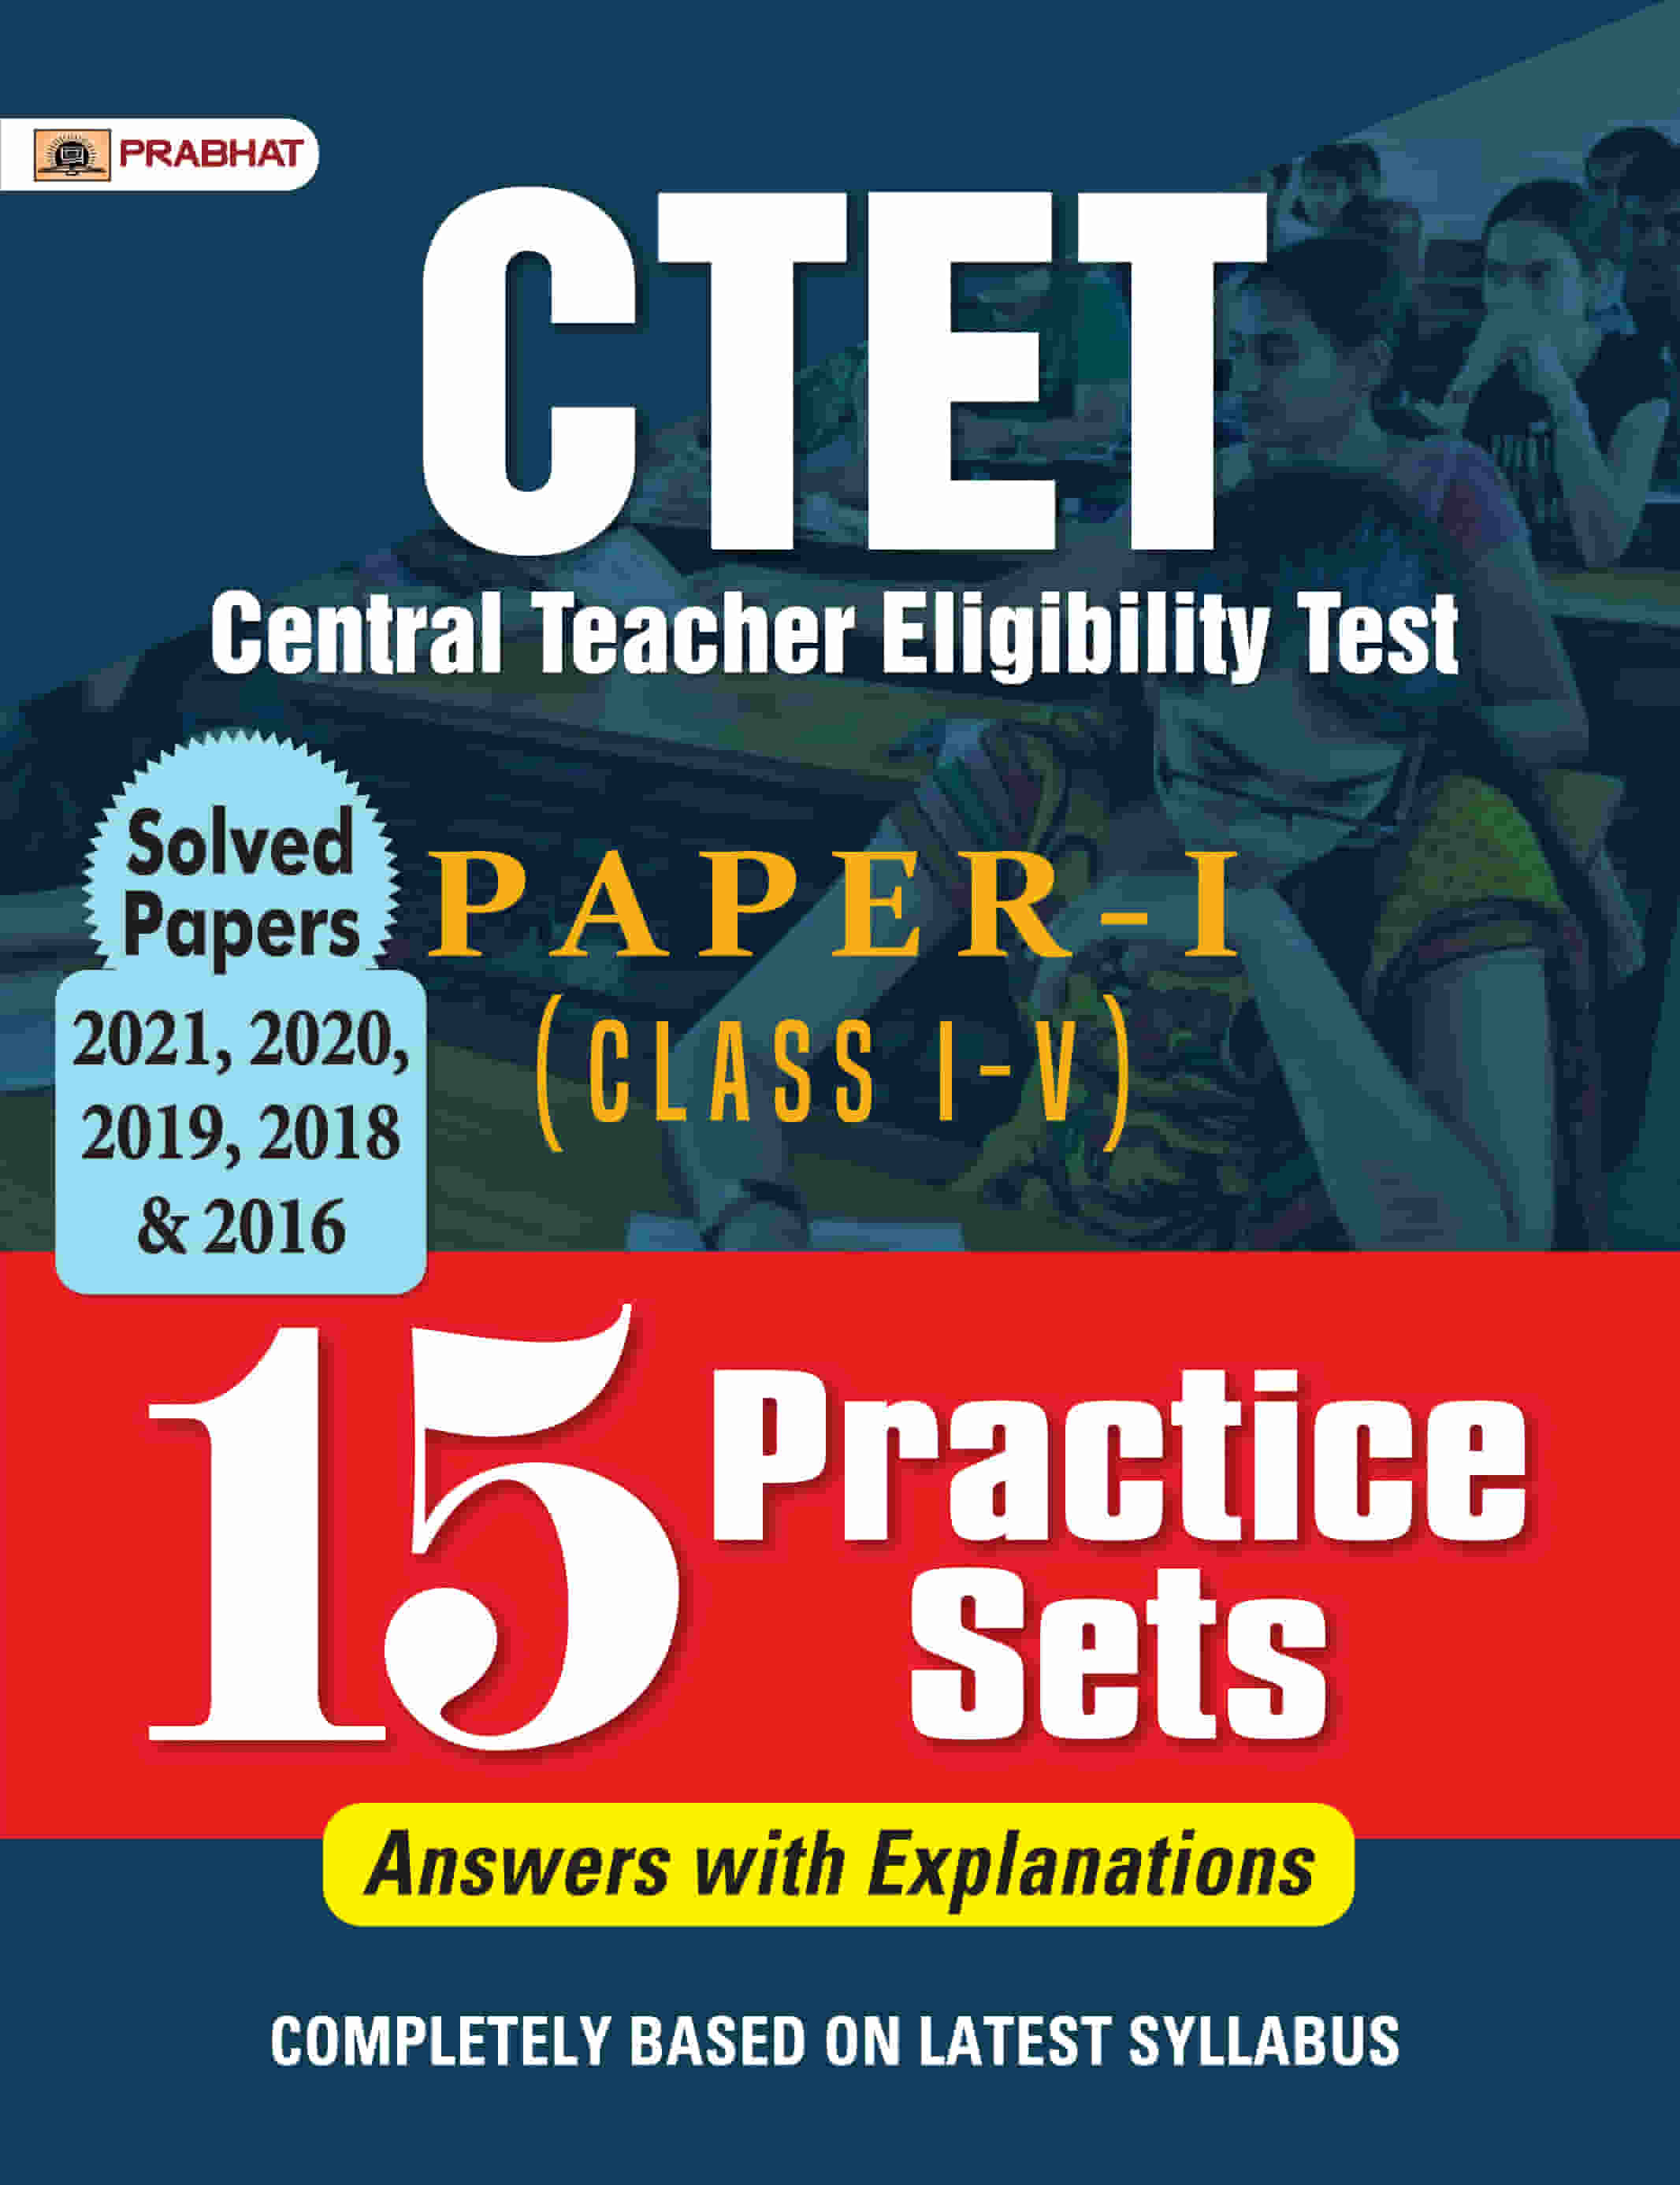 CTET Central Teacher Eligibility Test Paper-I (Class: I-V) 15 Practice Sets 